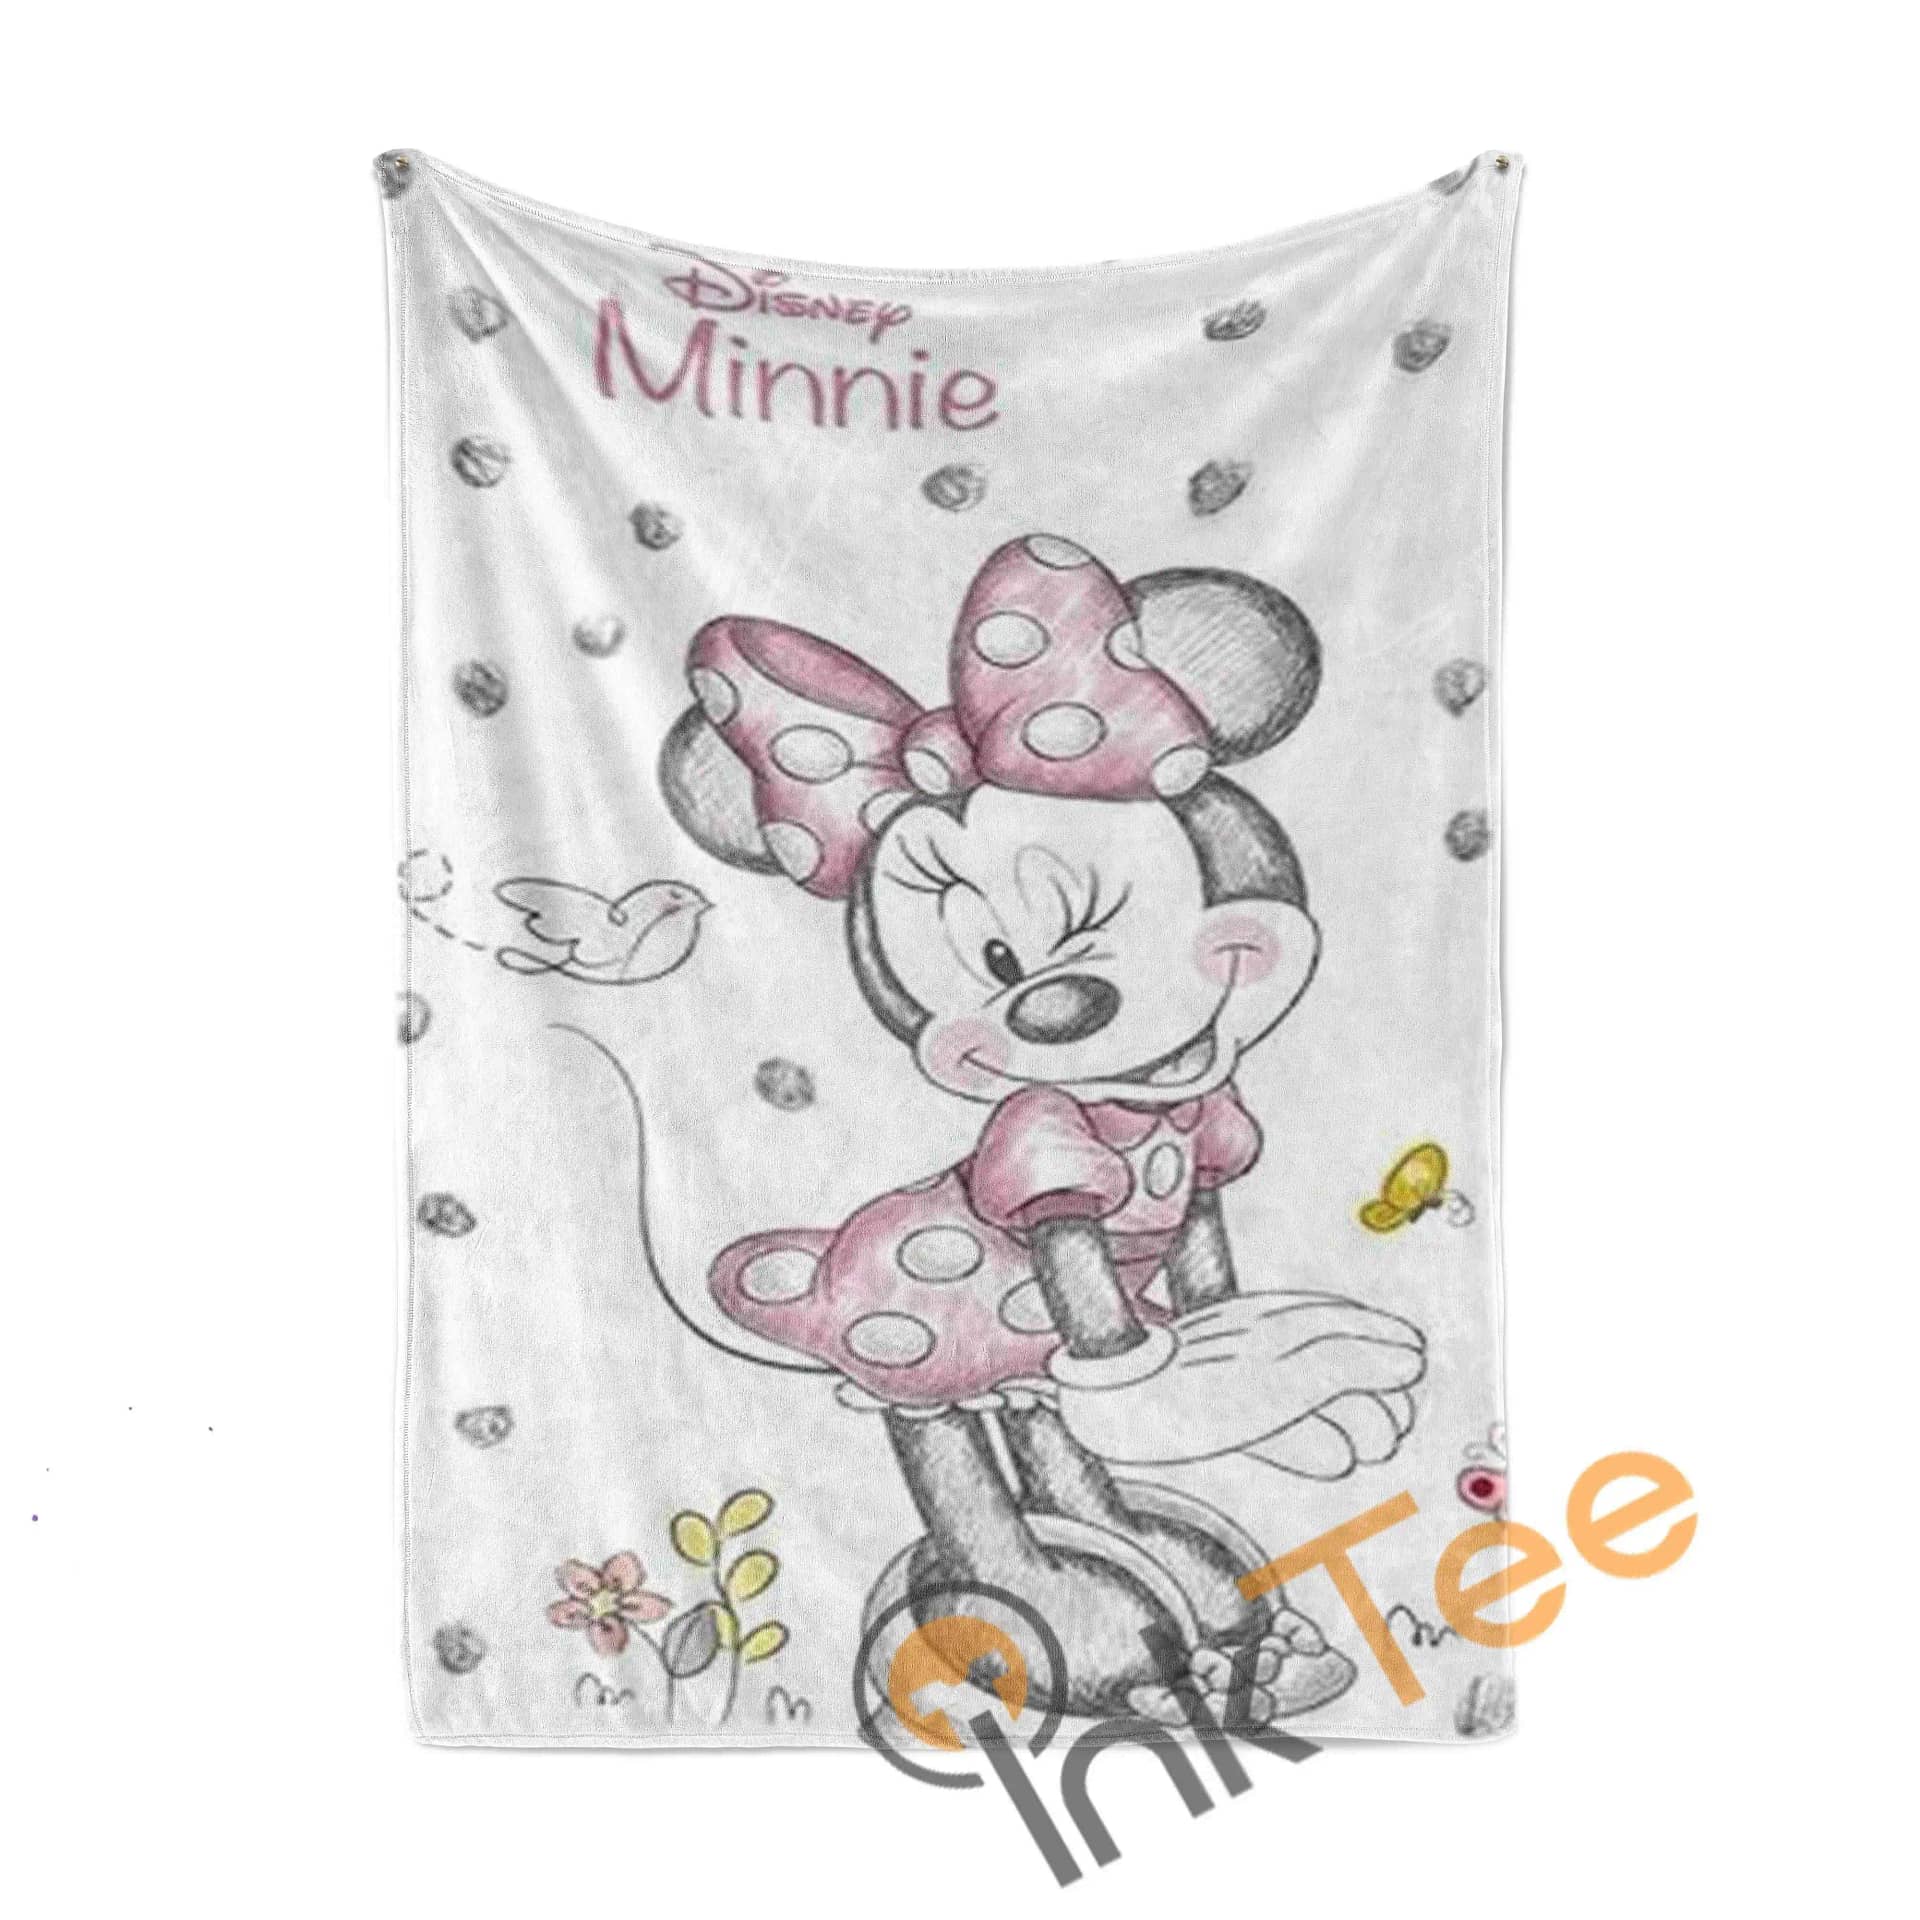 Disney Minnie Mickey Limited Edition Area Amazon Best Seller 4112 Fleece Blanket